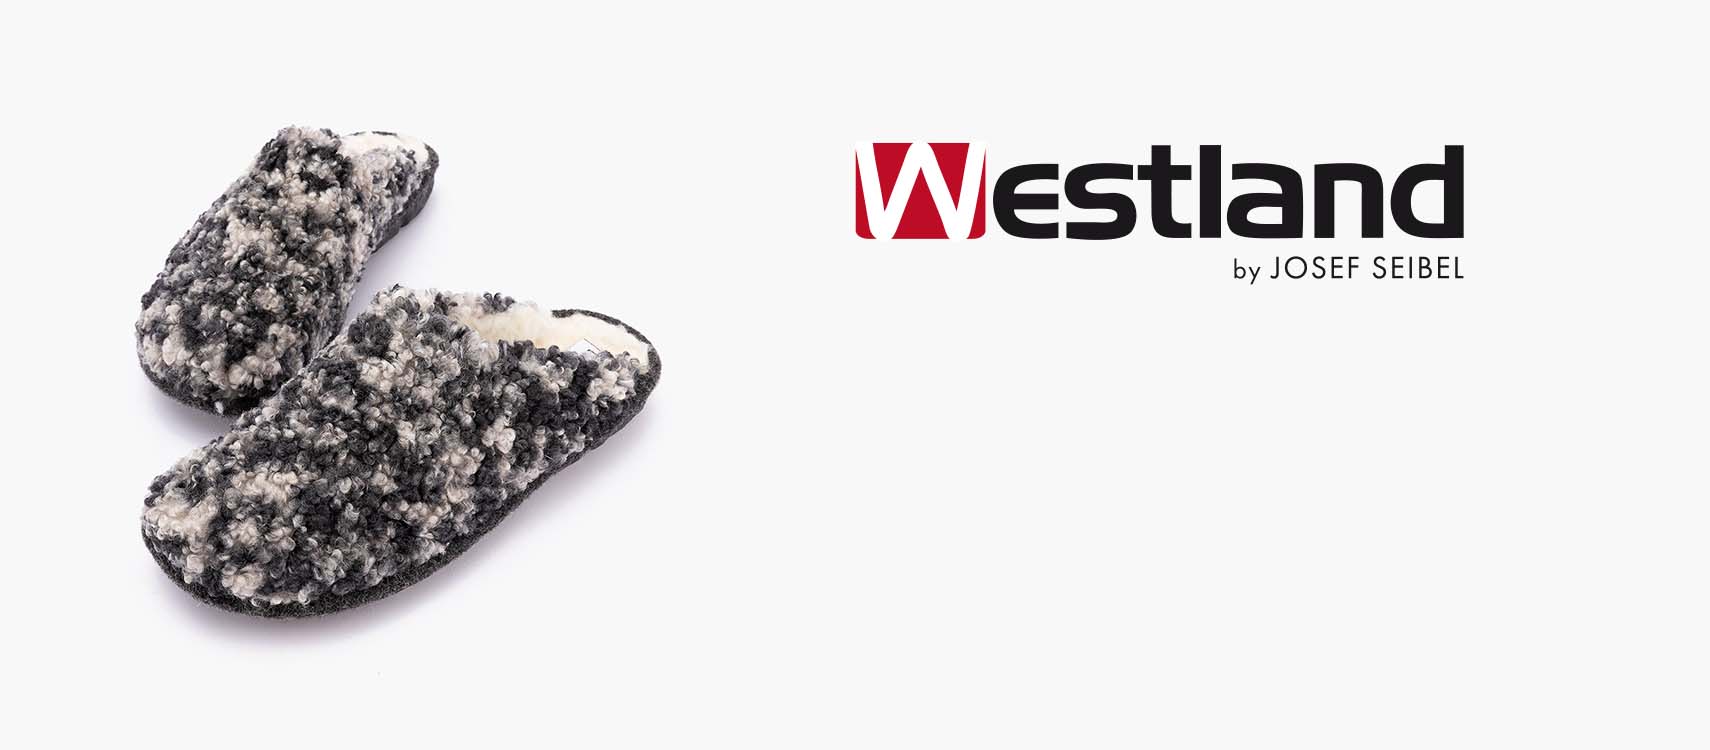 Westland Shoes by Josef Seibel